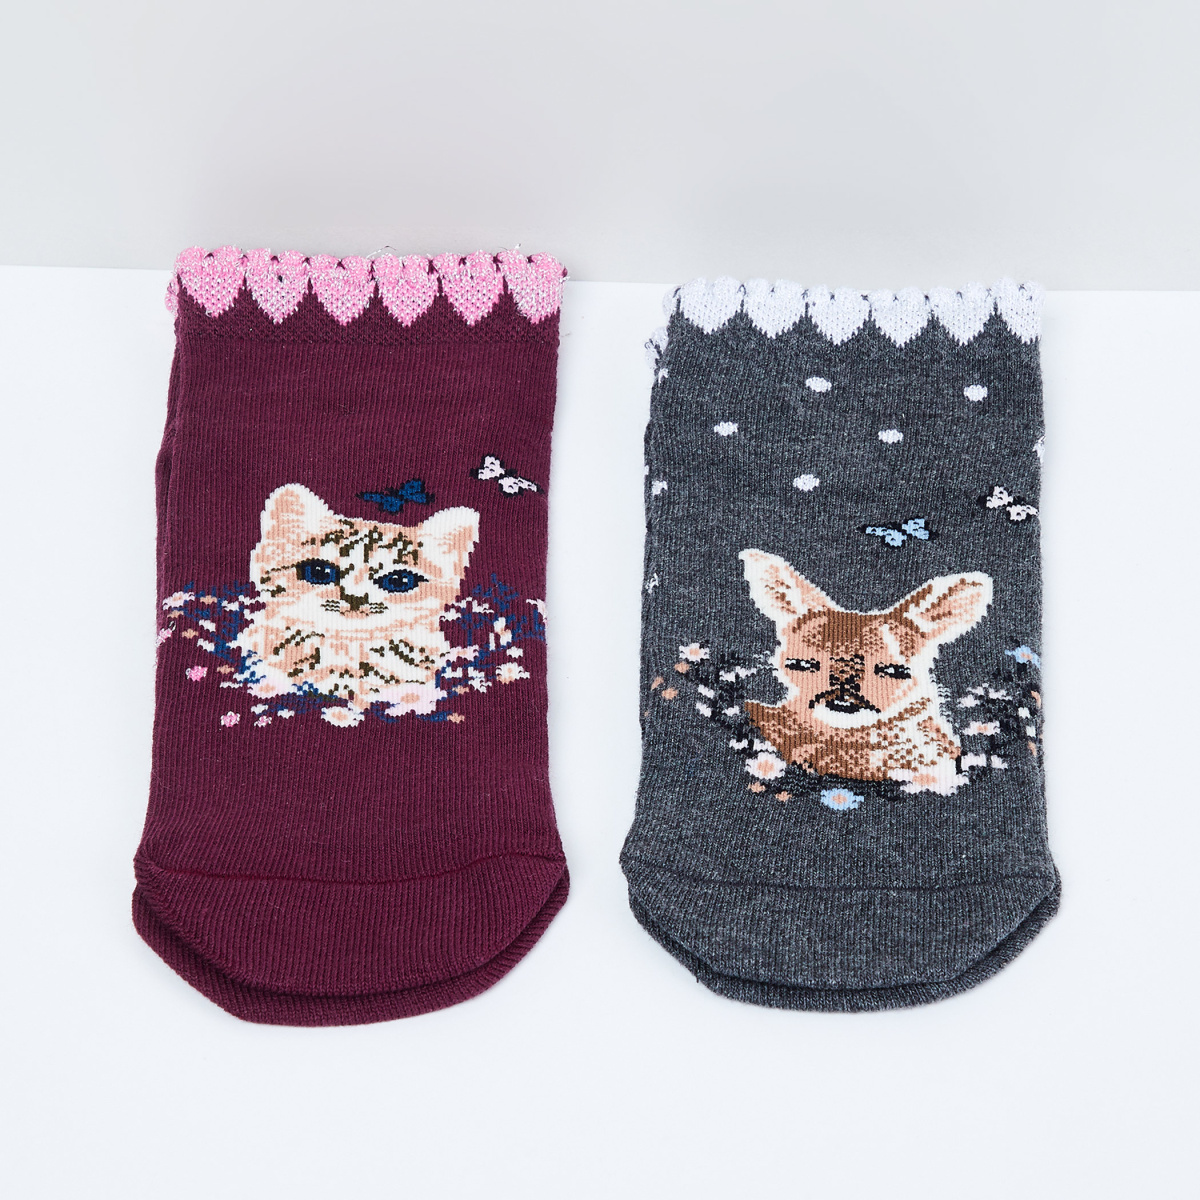 MAX Patterned Knit Socks - Pack of 2 Pcs.